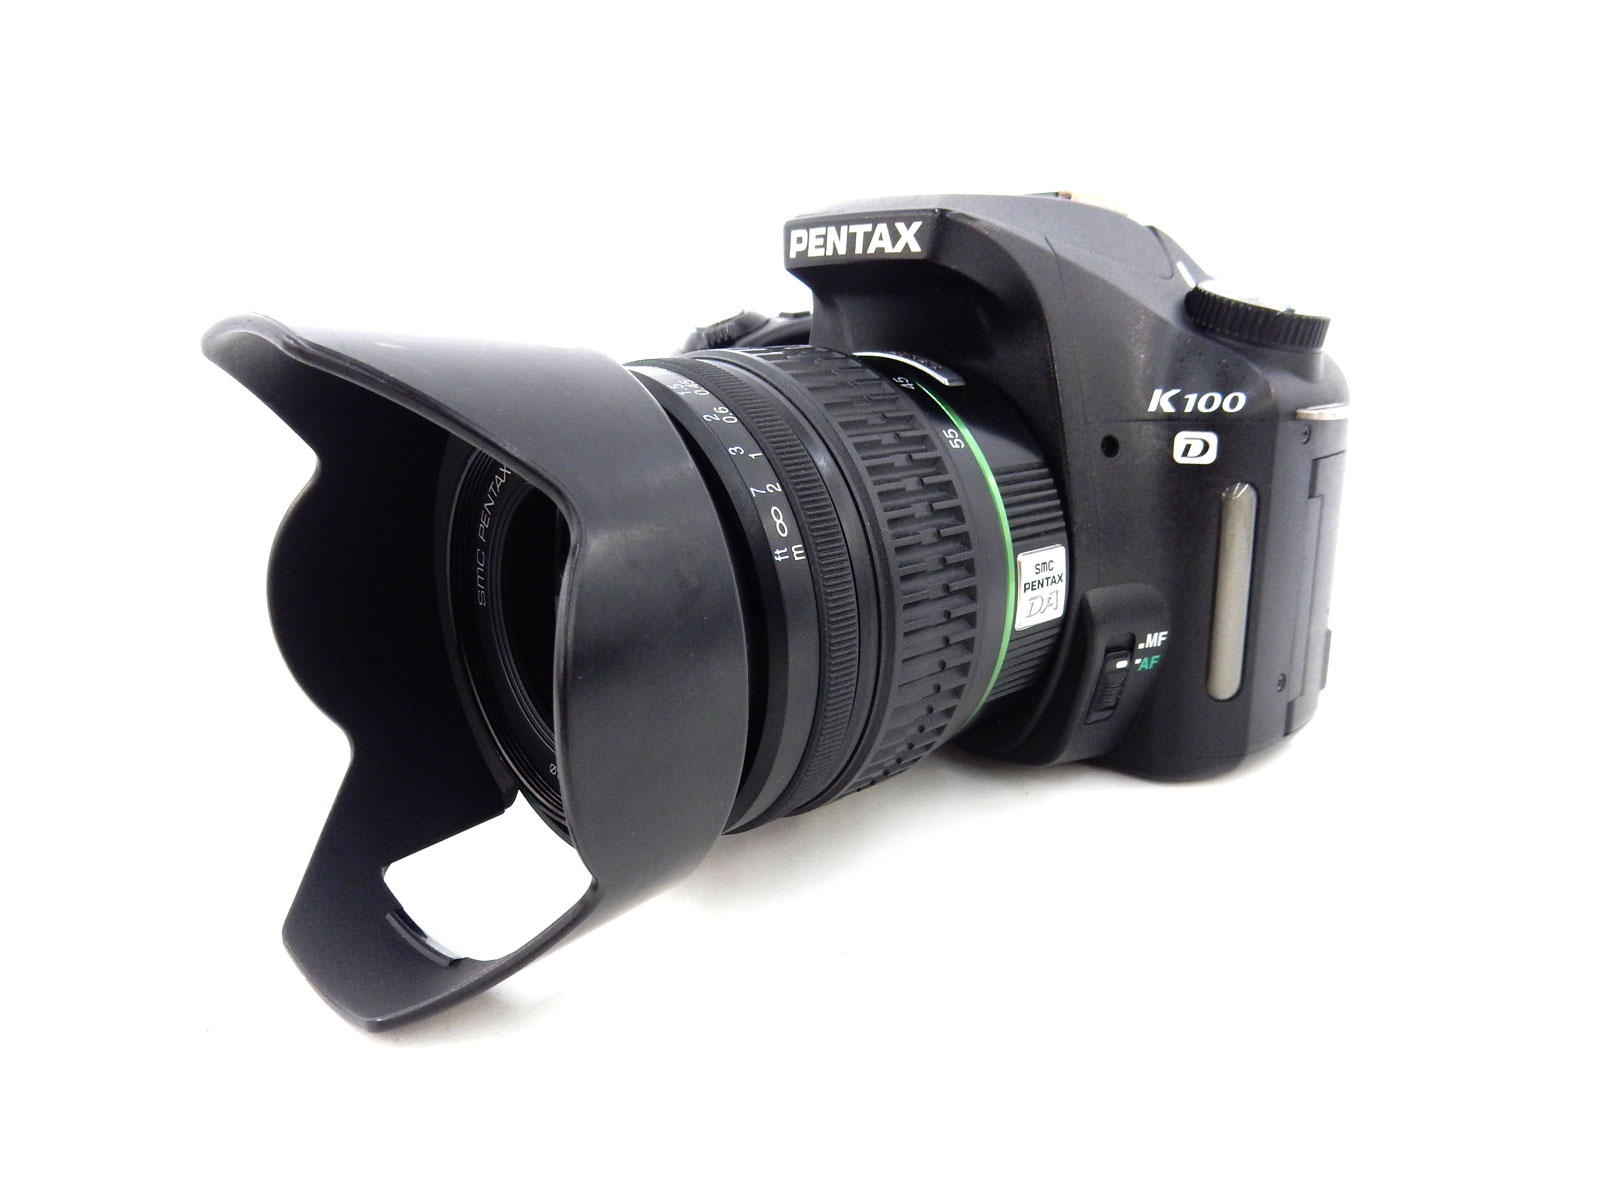 PENTAX/ペンタックス デジタル 一眼レフ カメラ K100D SMC PENTAX-DA 標準レンズ付き 買取 茨城 ニコニコ堂下妻店